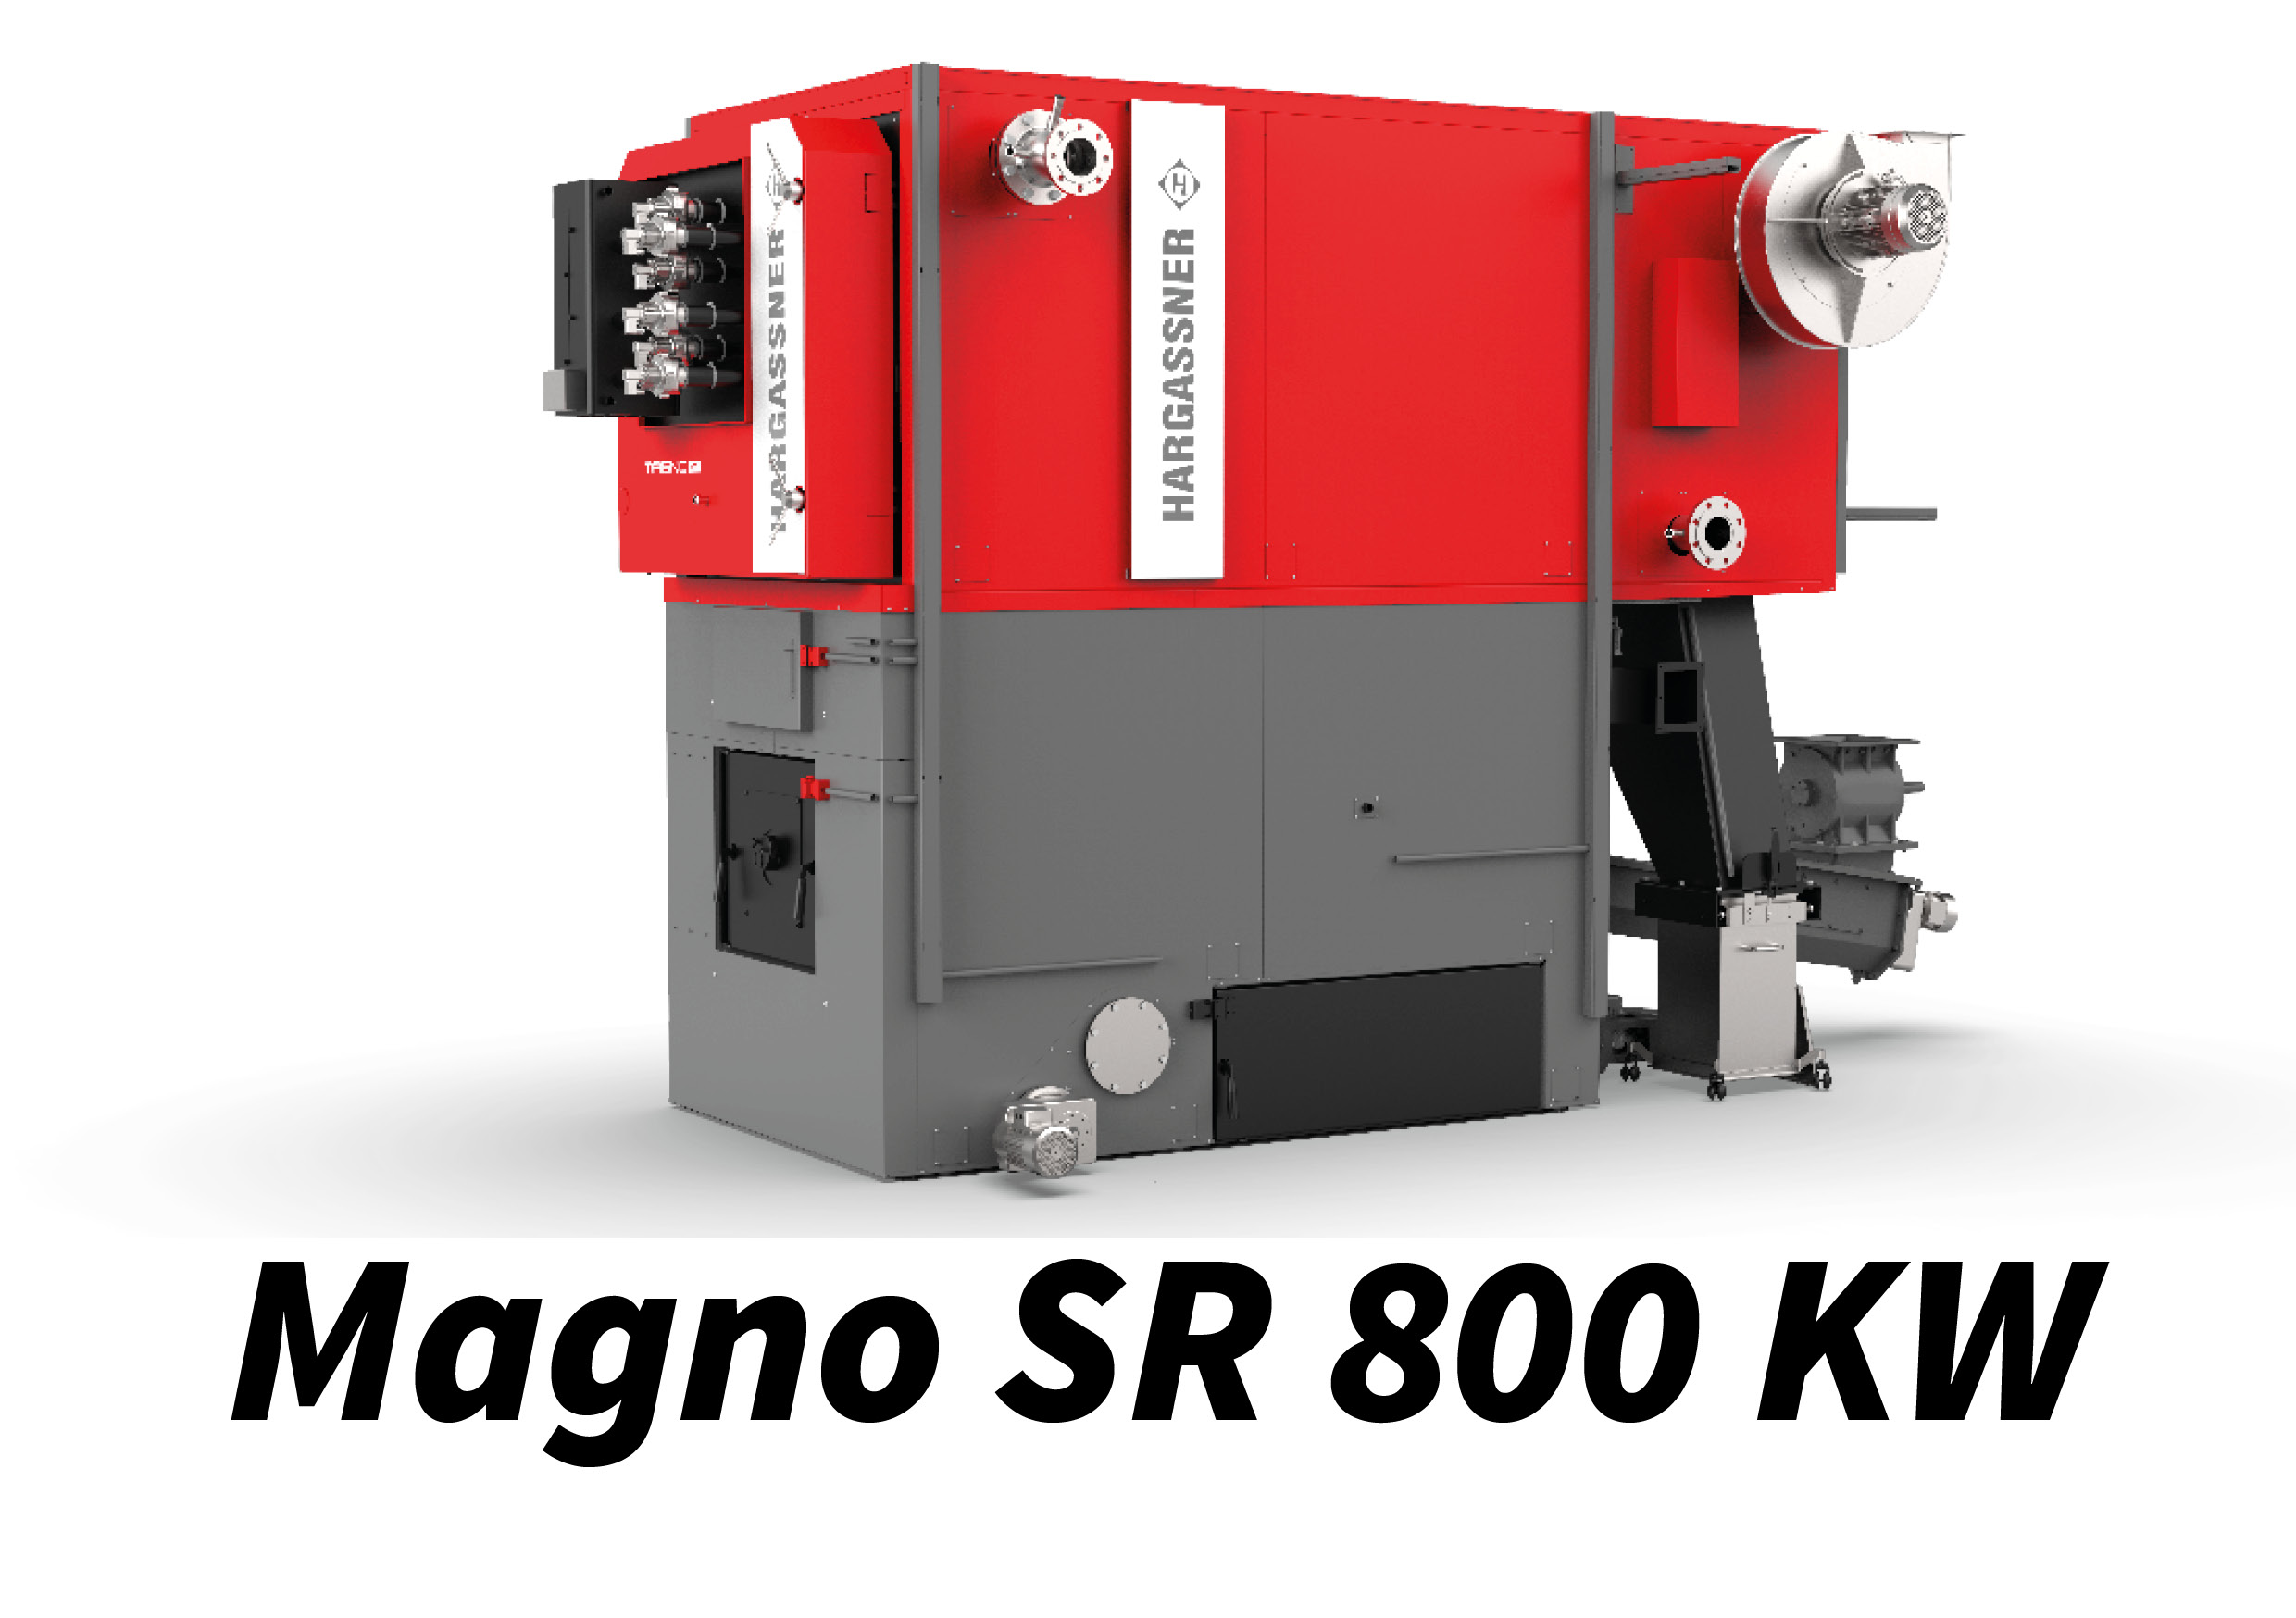 Magno SR 800 kW